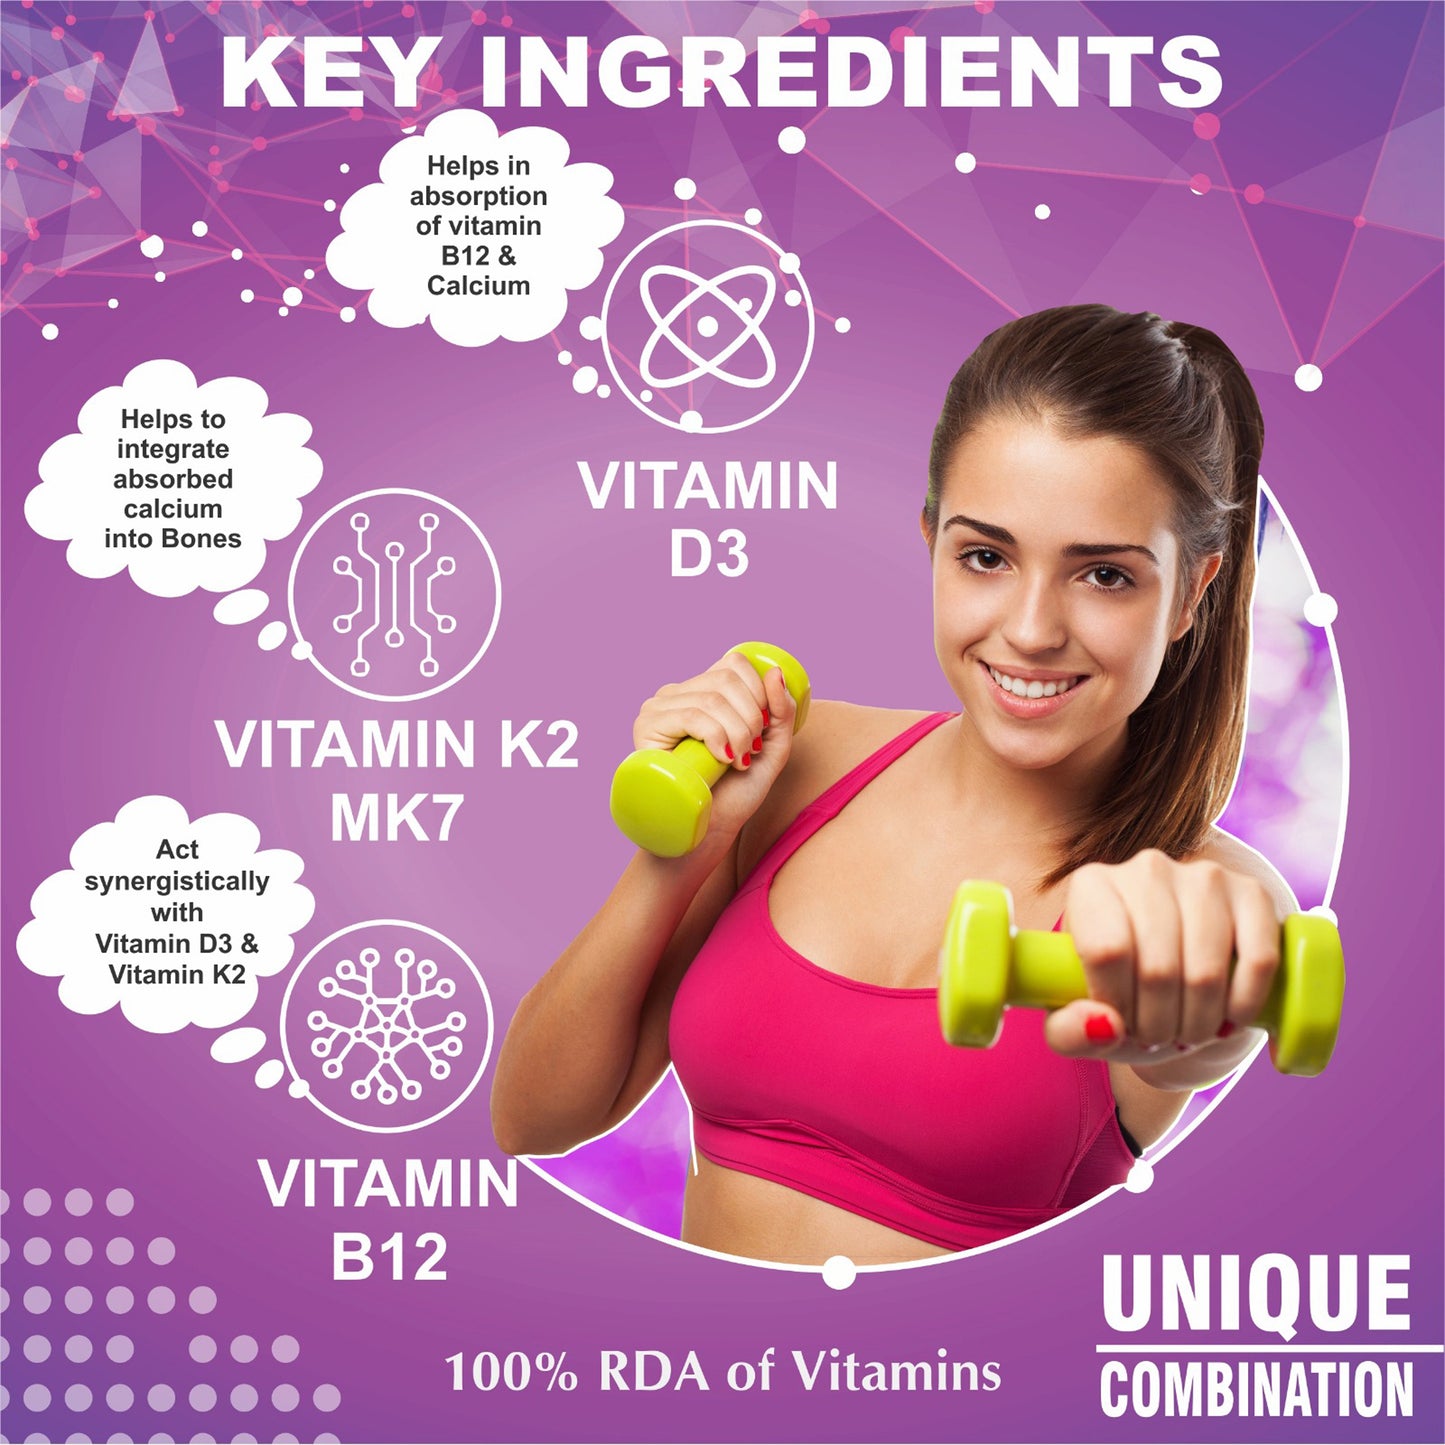 ClearCut Vitamin D3, Vitamin k2, Vitamin B12, Calcium tablet for bones & Joint support